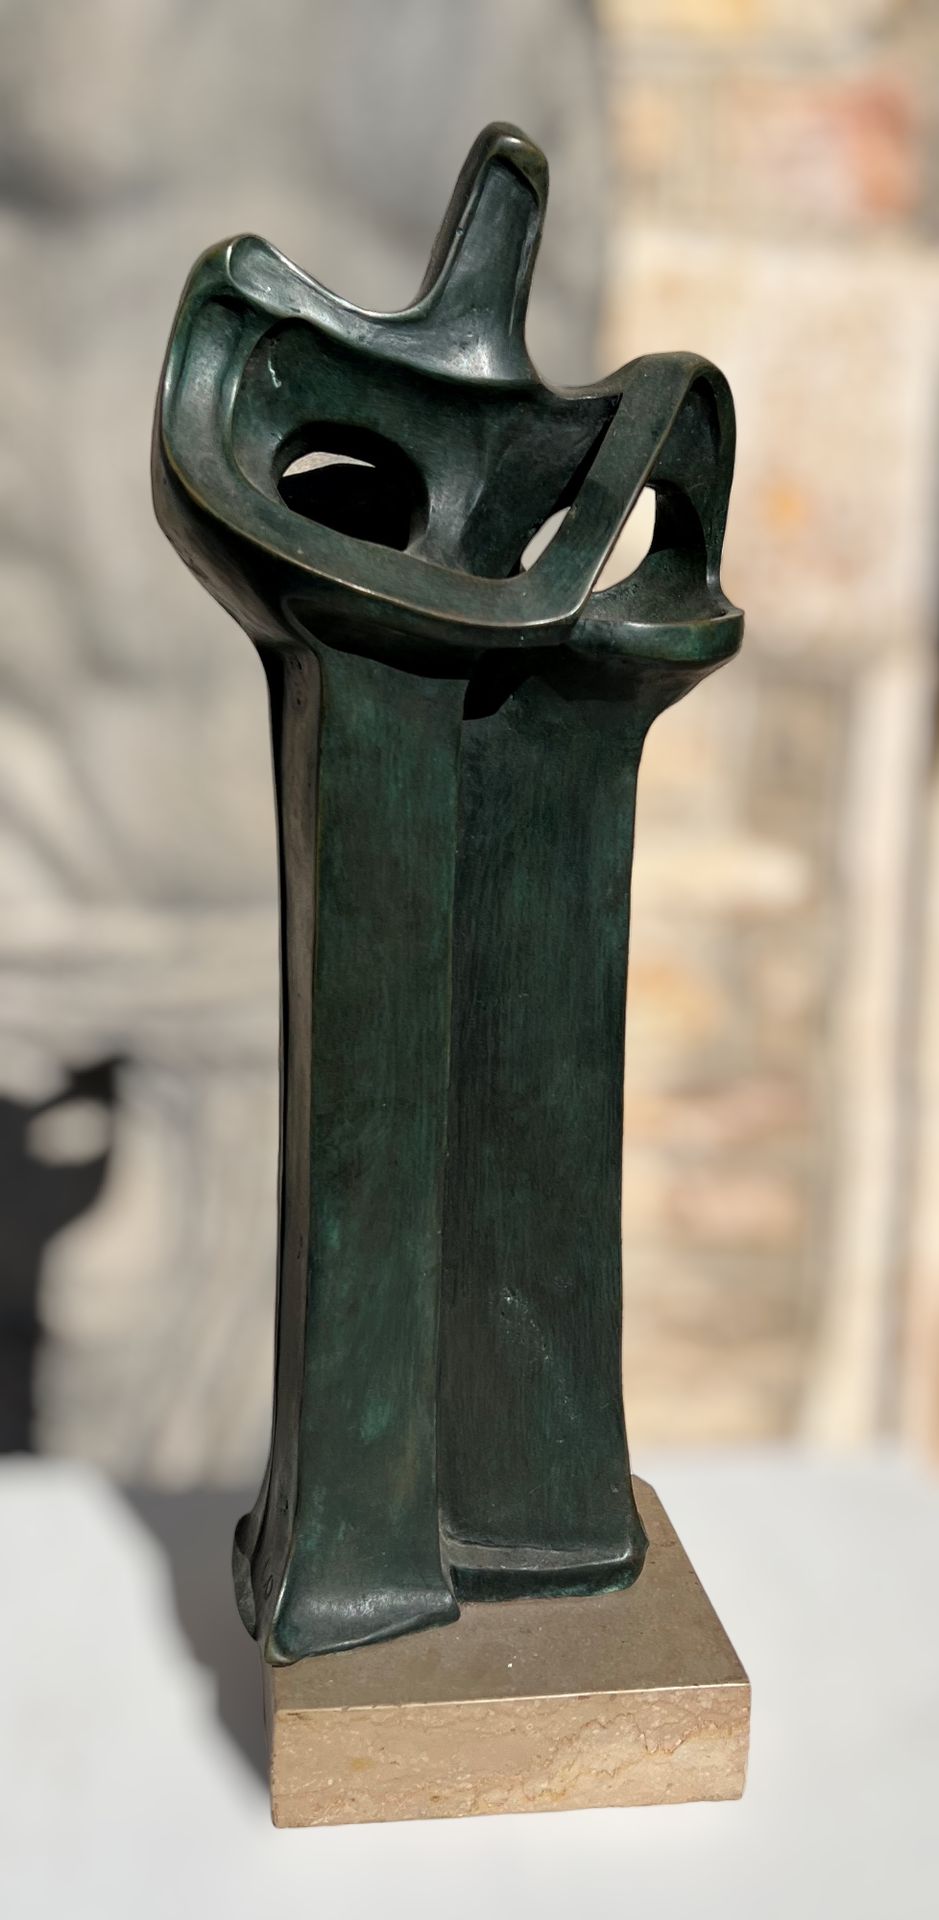 Null Christian ODDOUX (1947-2022), "母语", 青铜和石灰石底座, 2014年

在艺术家Christian Oddoux家中&hellip;